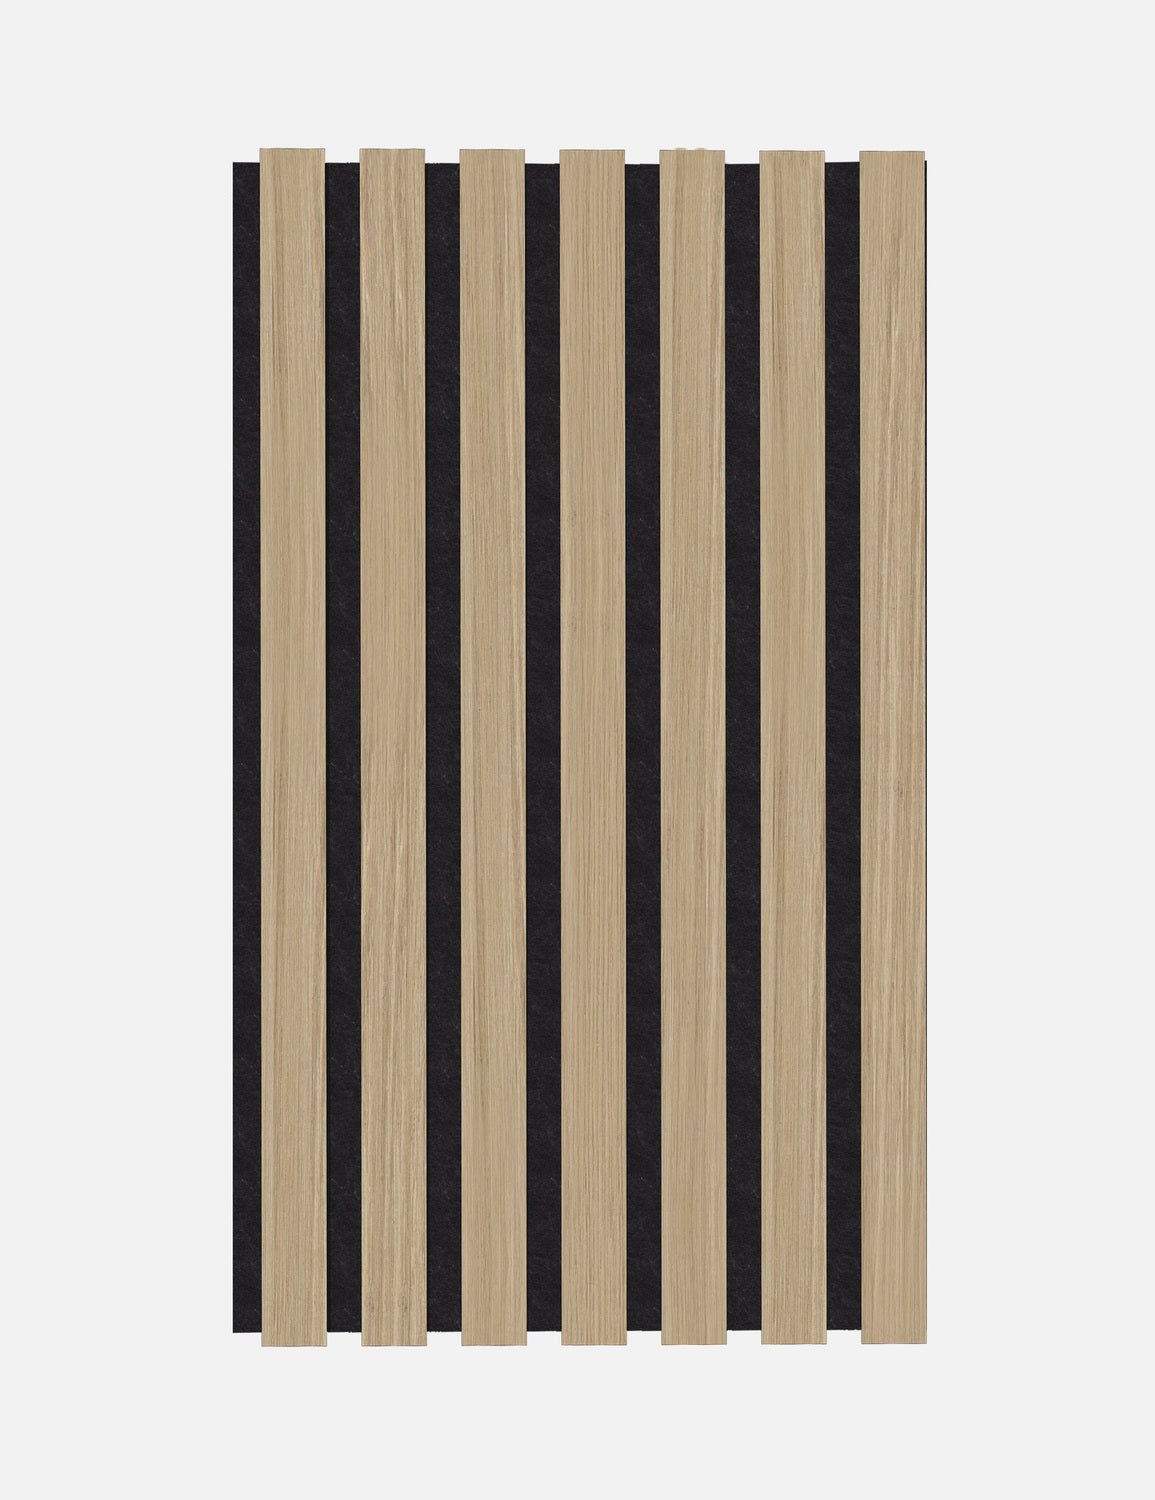 Muster Eiche MDF Schwarz Holzig - 20x12x1,6cm